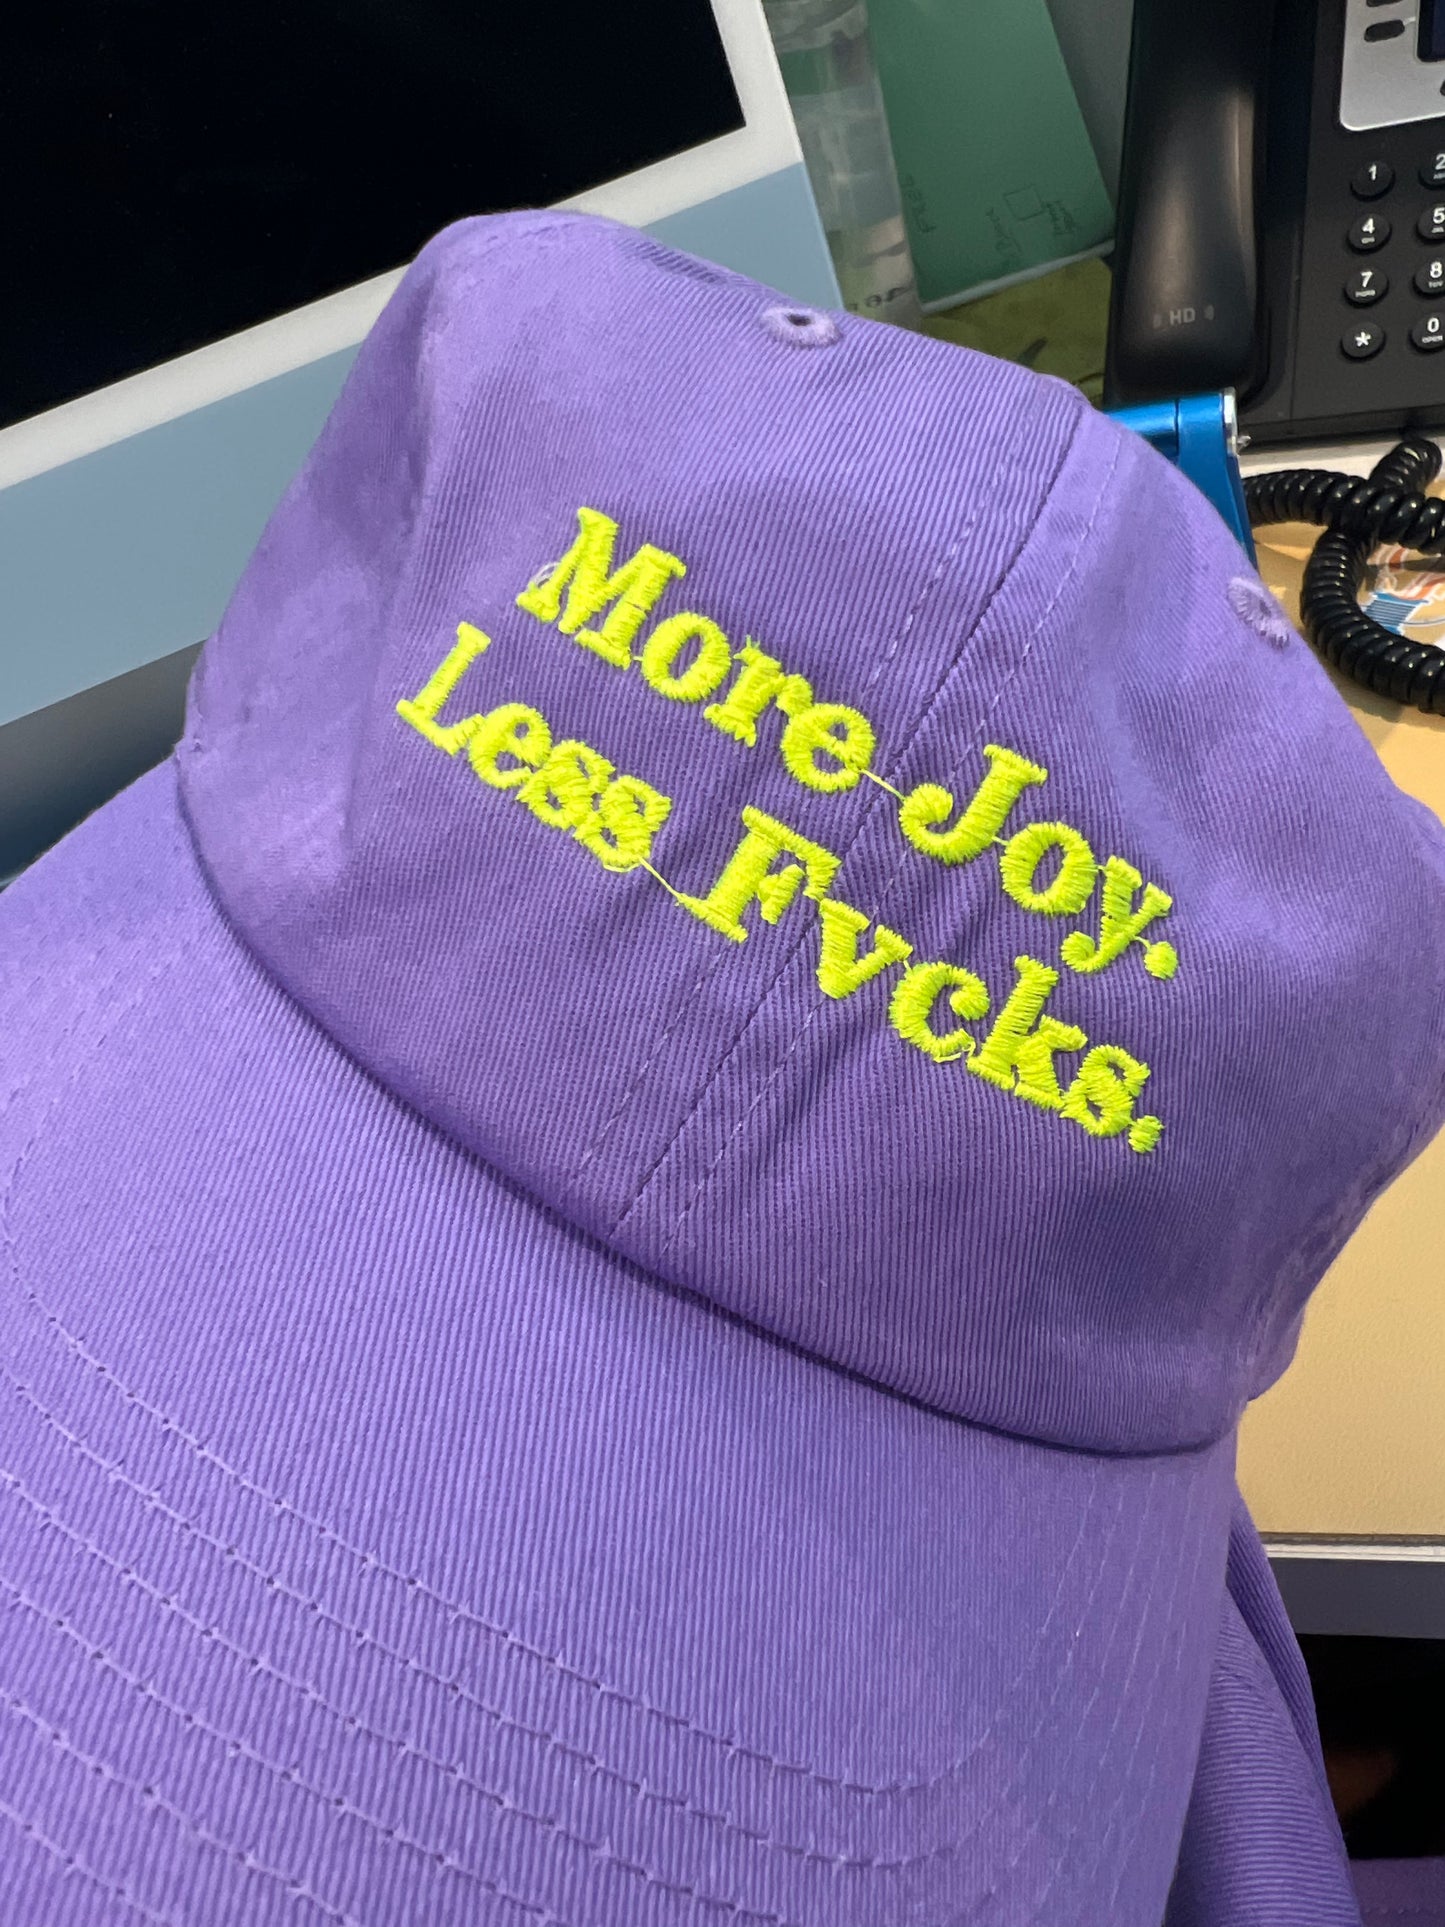 More Joy. Less Fvcks Hat